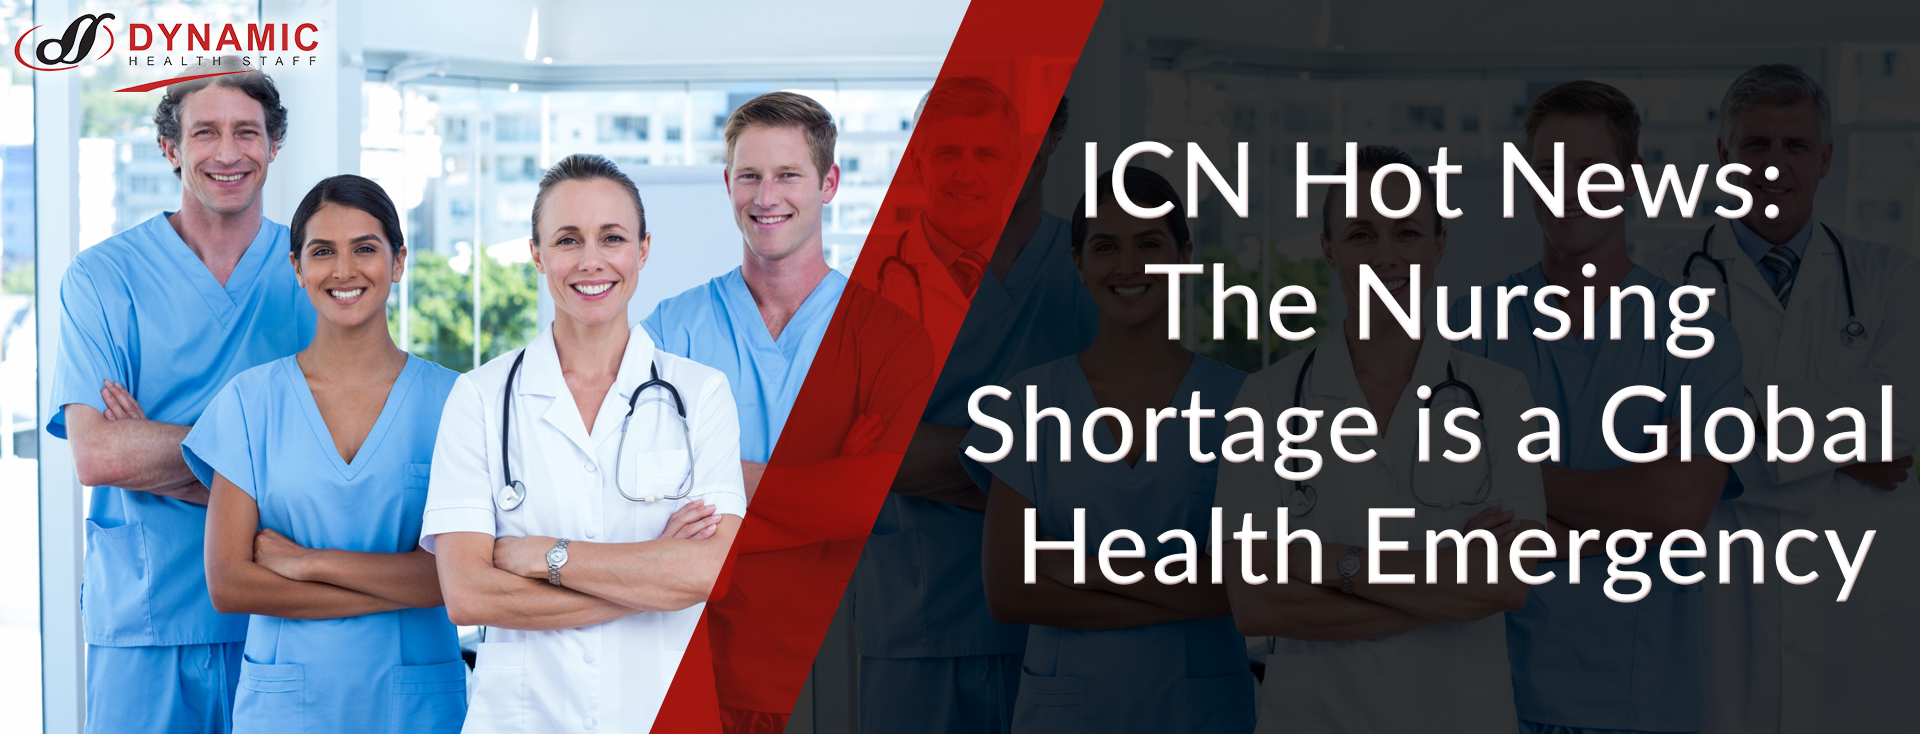 ICN Hot News The Nursing Shortage is a Global Health Emergency